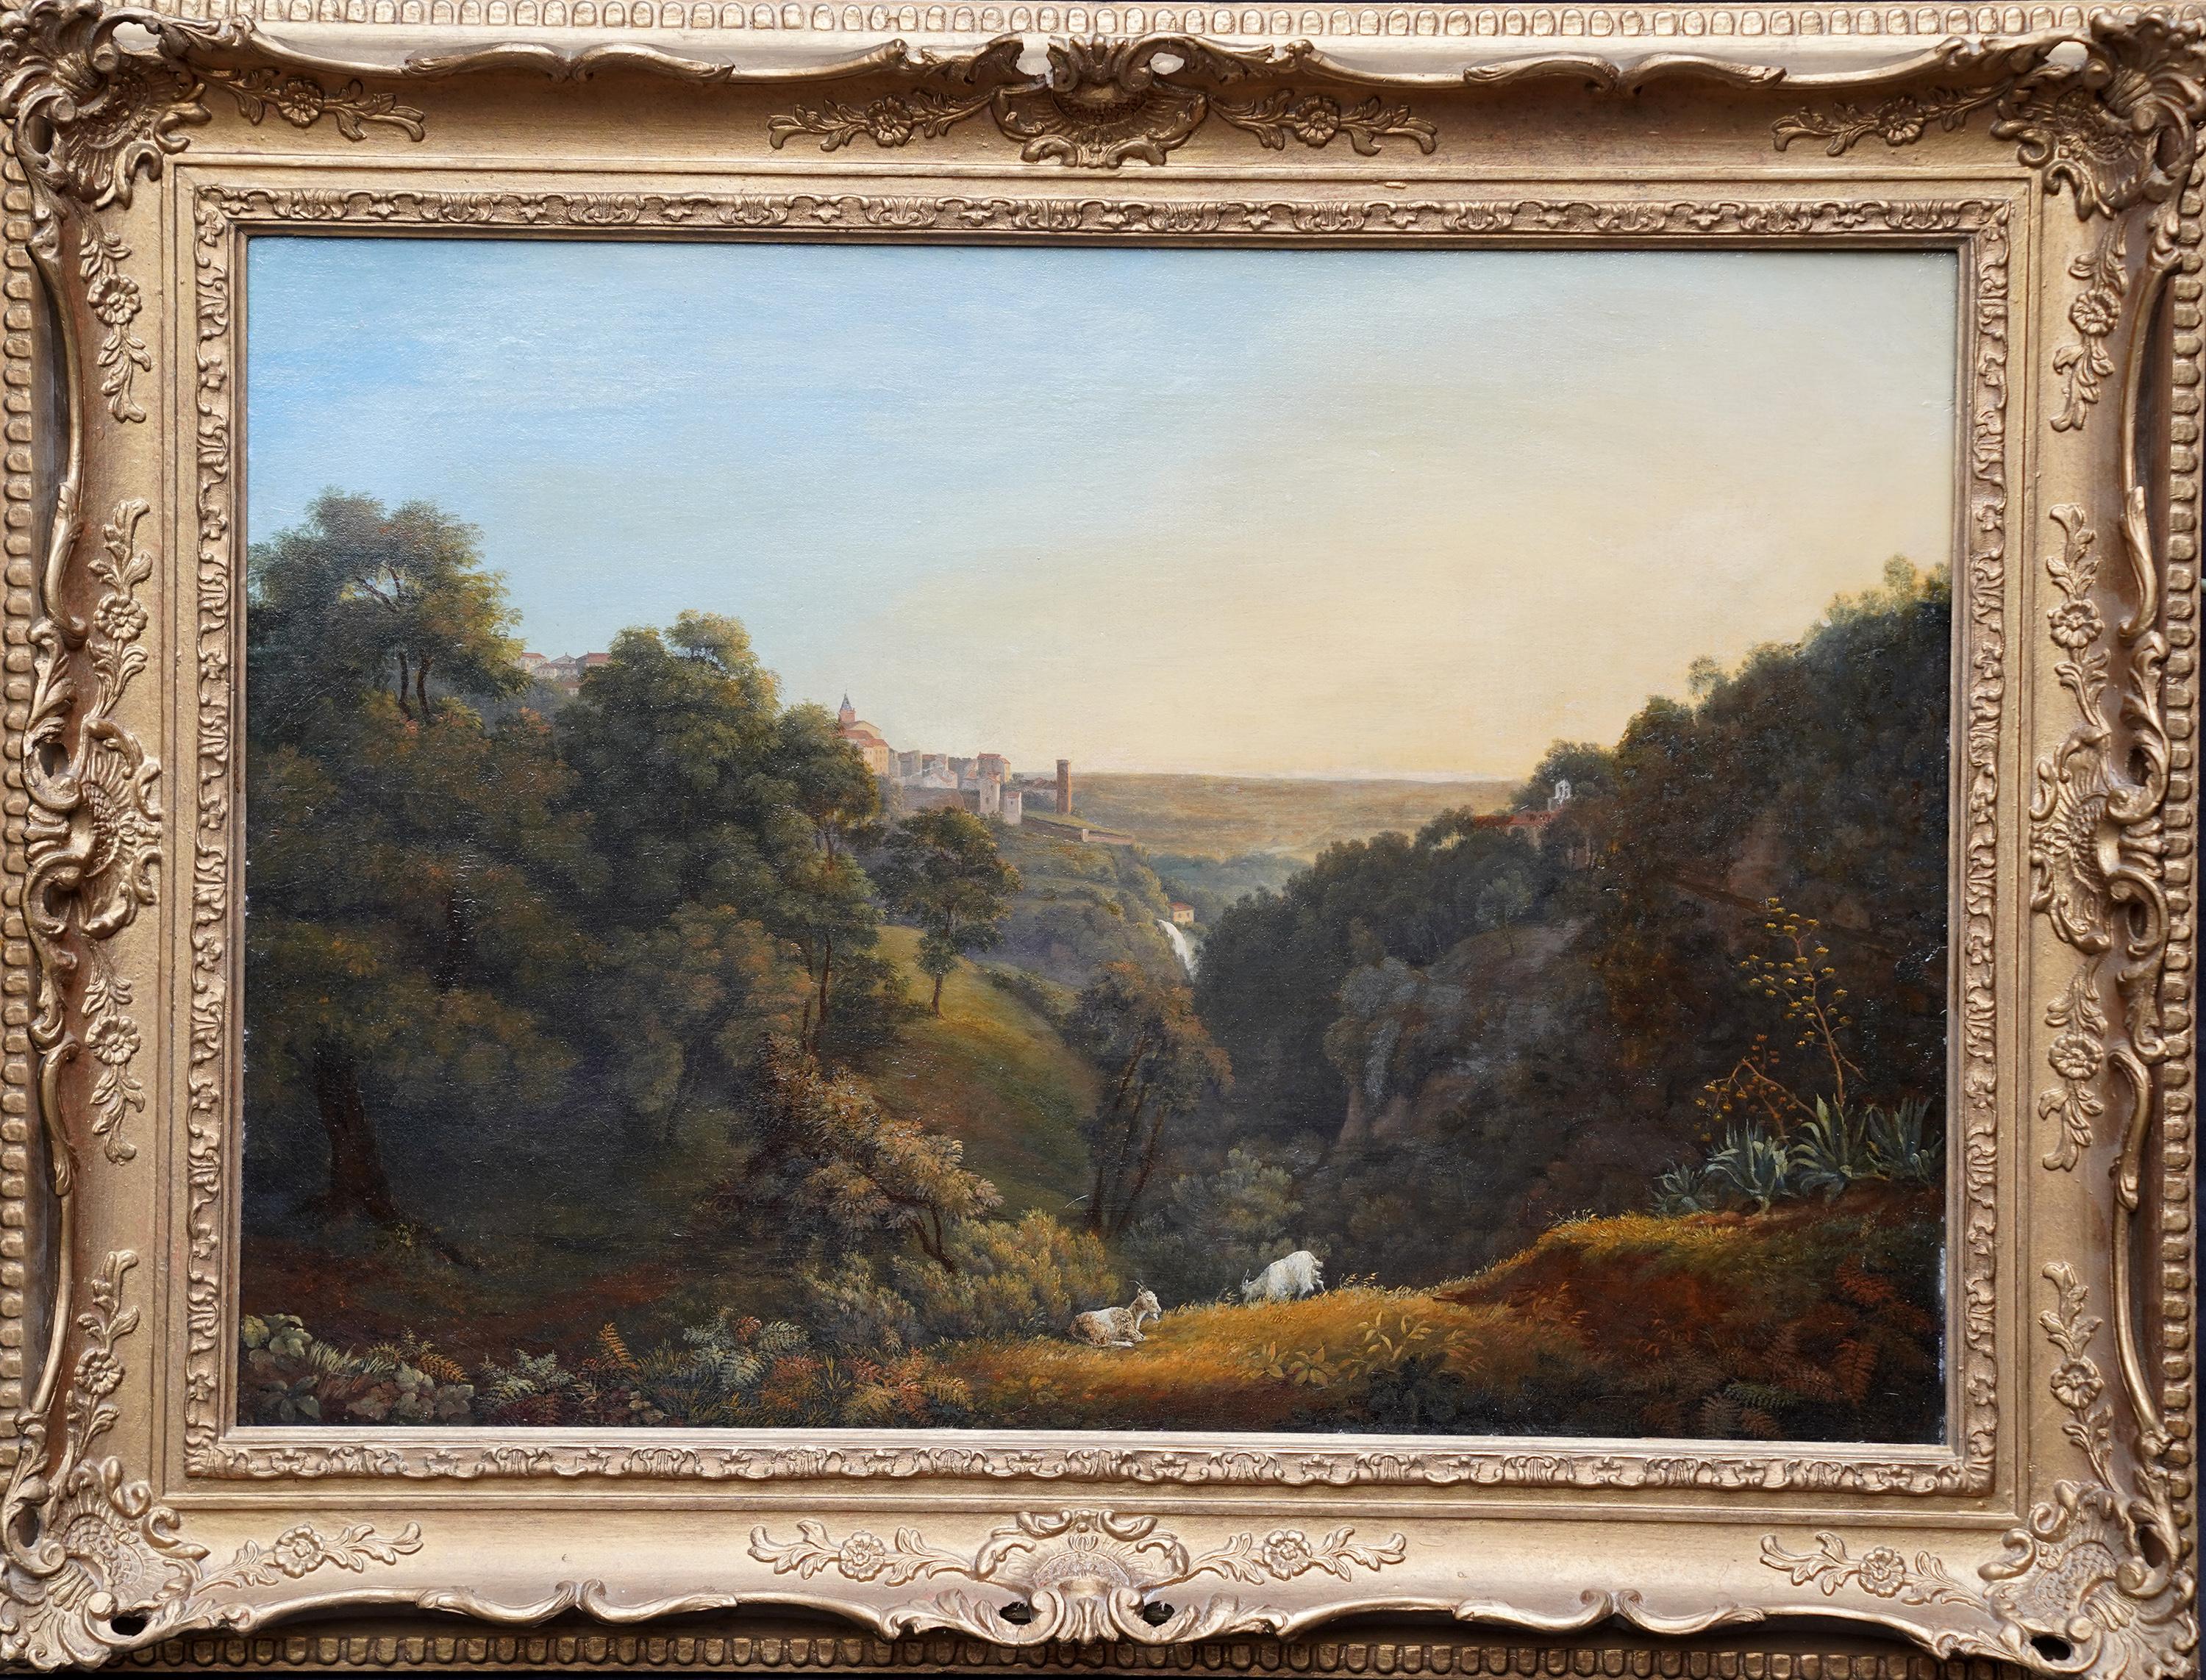 Jean Xavier Bidauld Animal Painting - Tivoli Landscape - French 19th century art Italian landscape oil painting goats